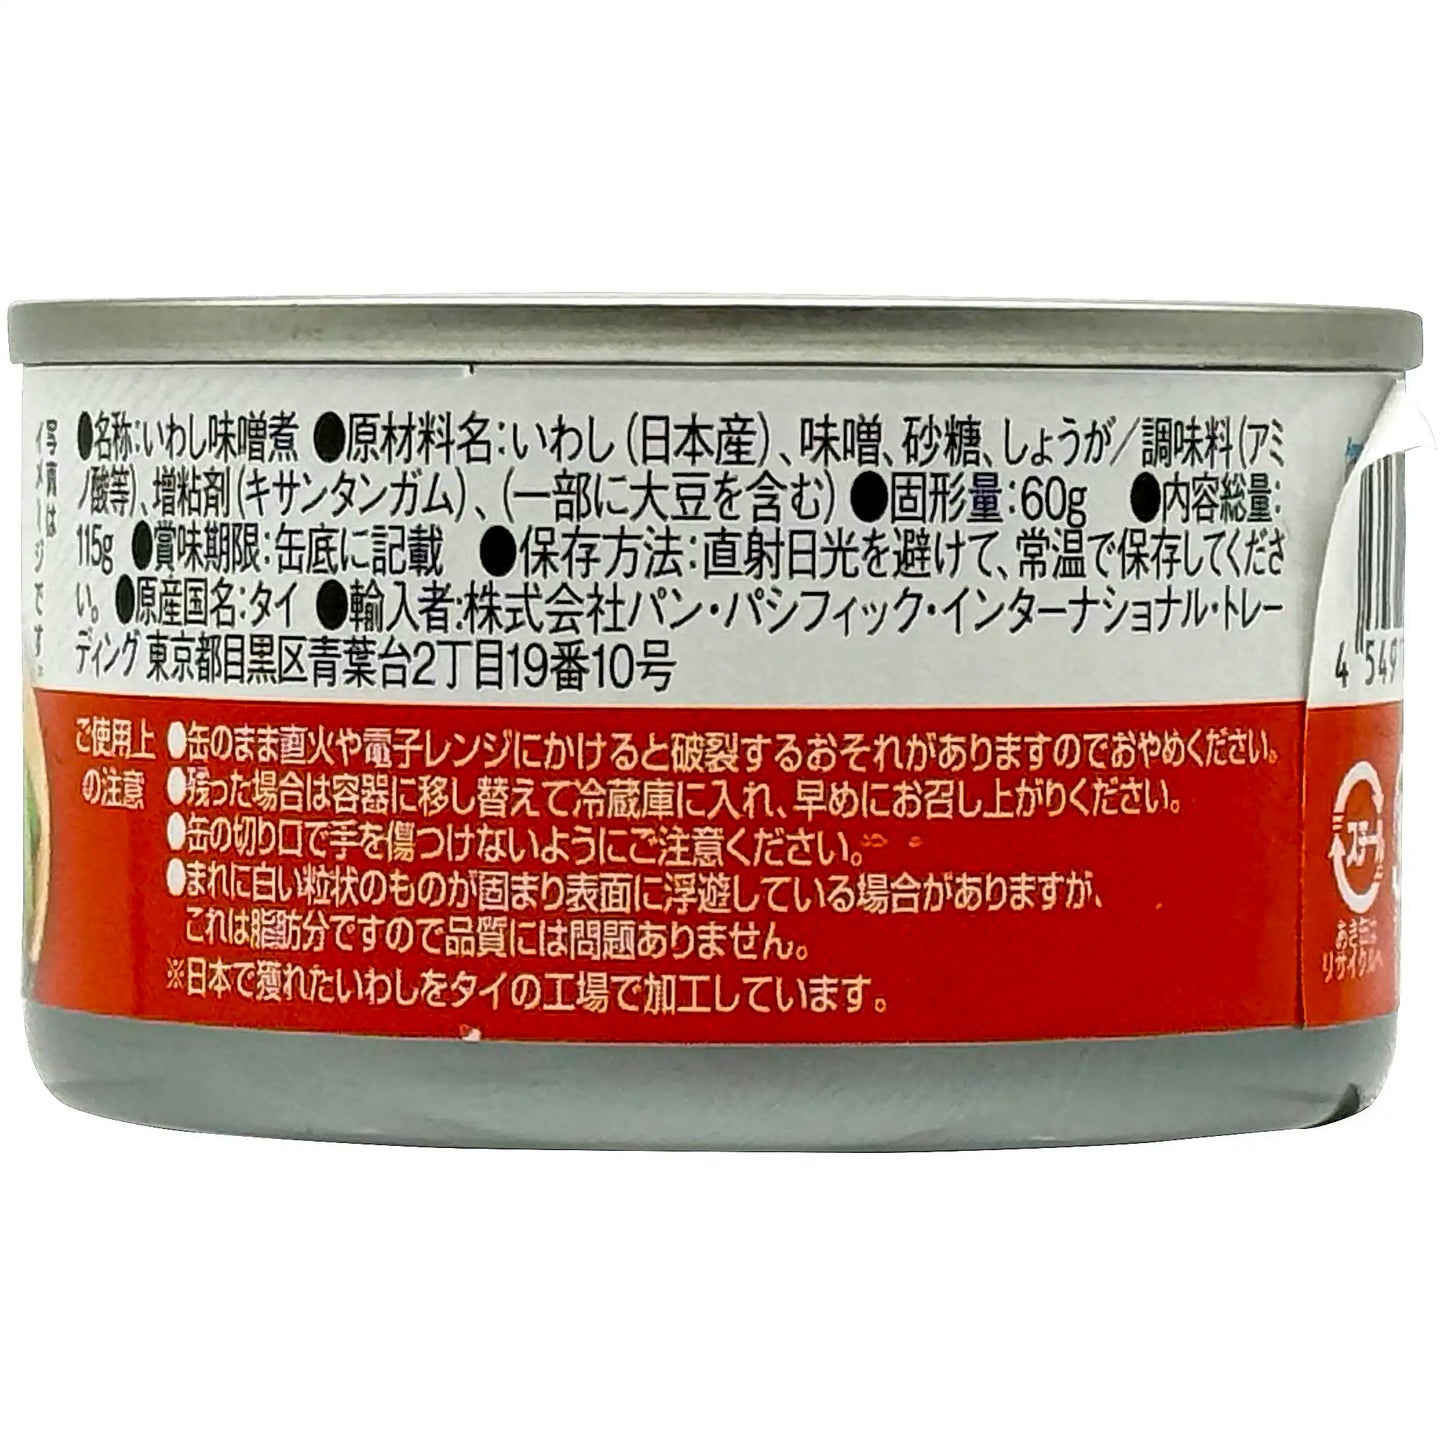 Jonetz Canned Sardine Soy Sauce 4.5 oz - Tokyo Central - Canned Foods - Jonetz -